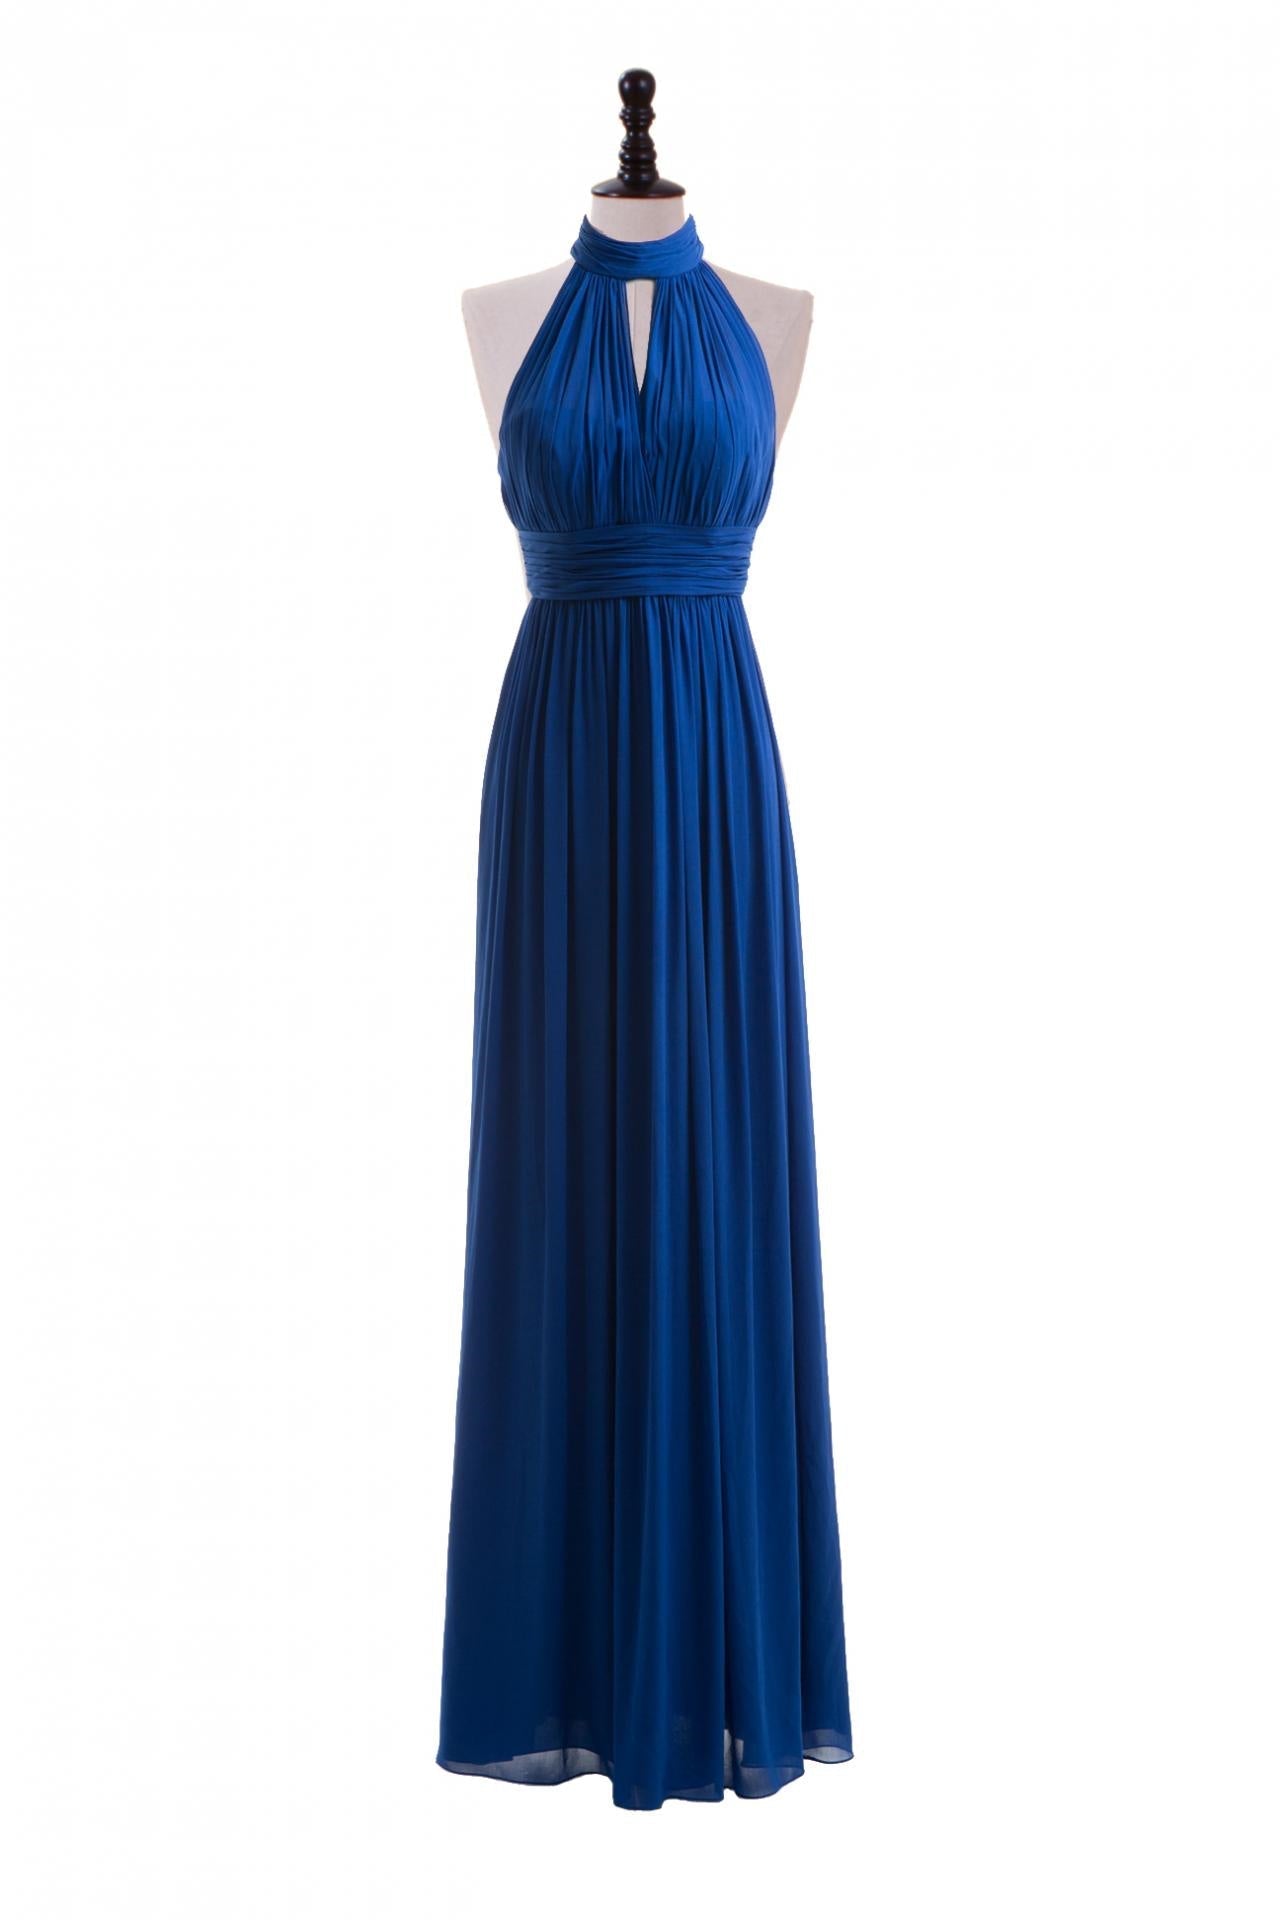 Party Dress Dress Code, Royal Blue Chiffon Halter Keyhole Long Formal Dress